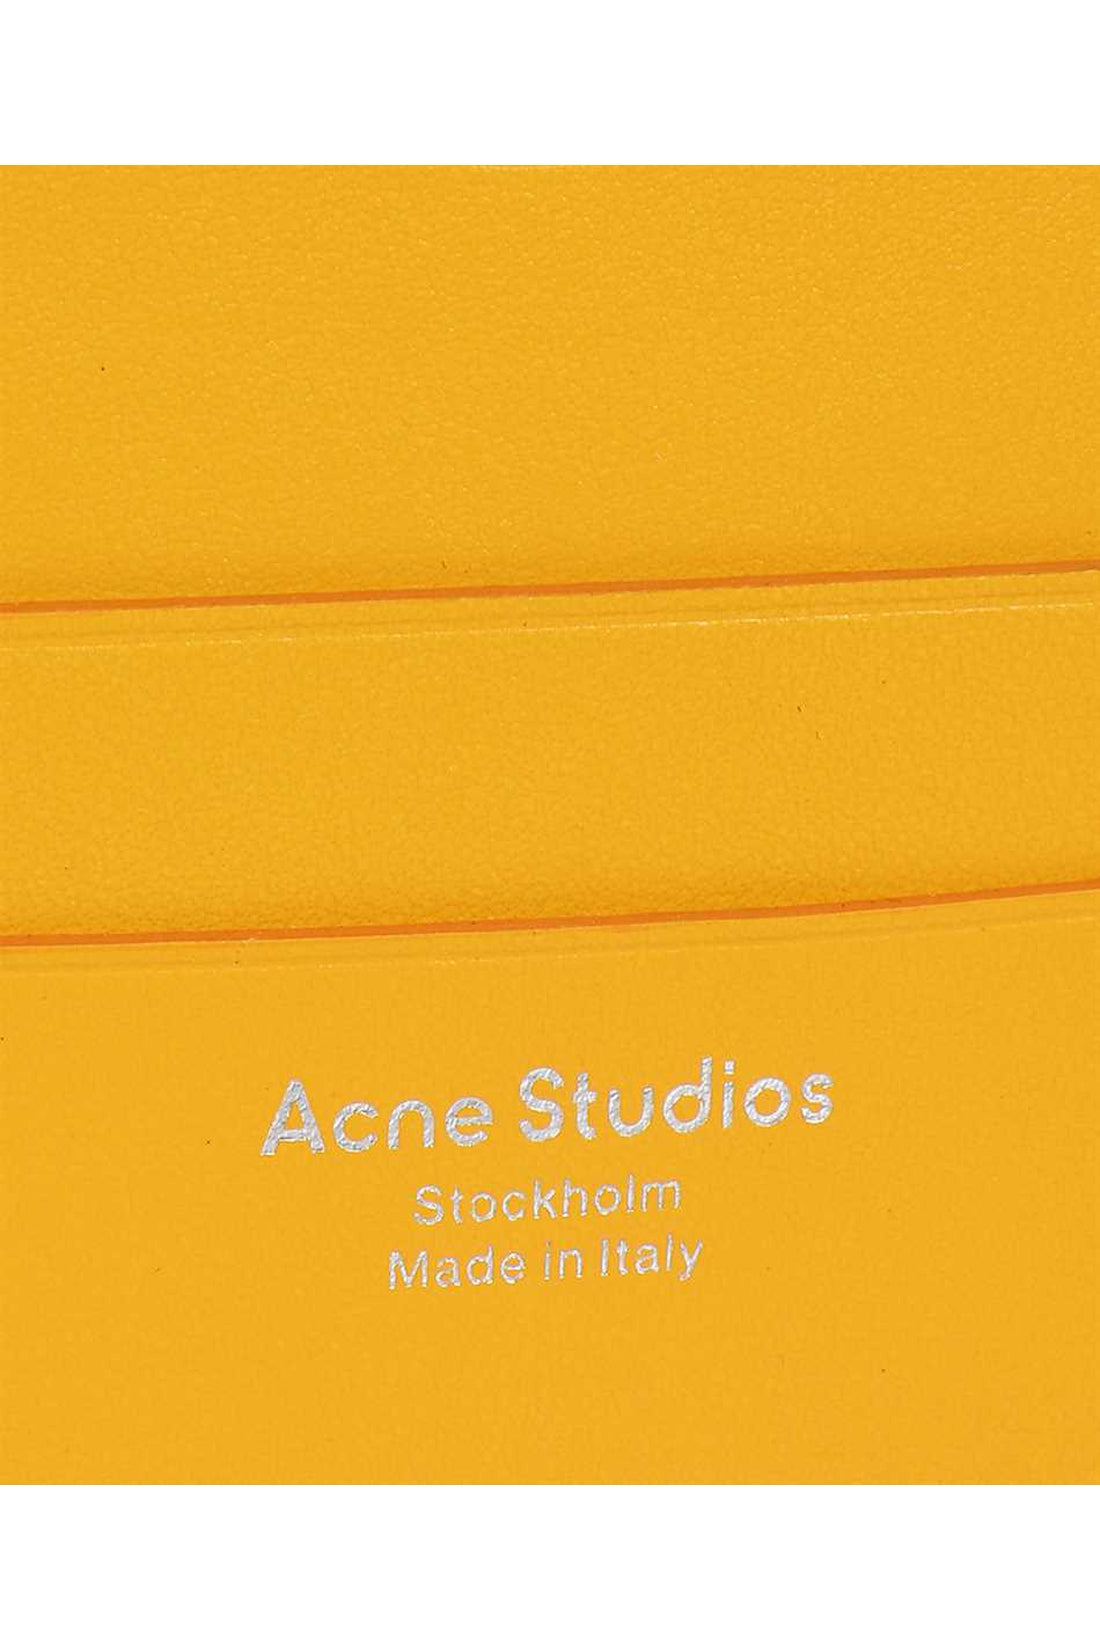 Acne Studios-OUTLET-SALE-Leather card holder-ARCHIVIST